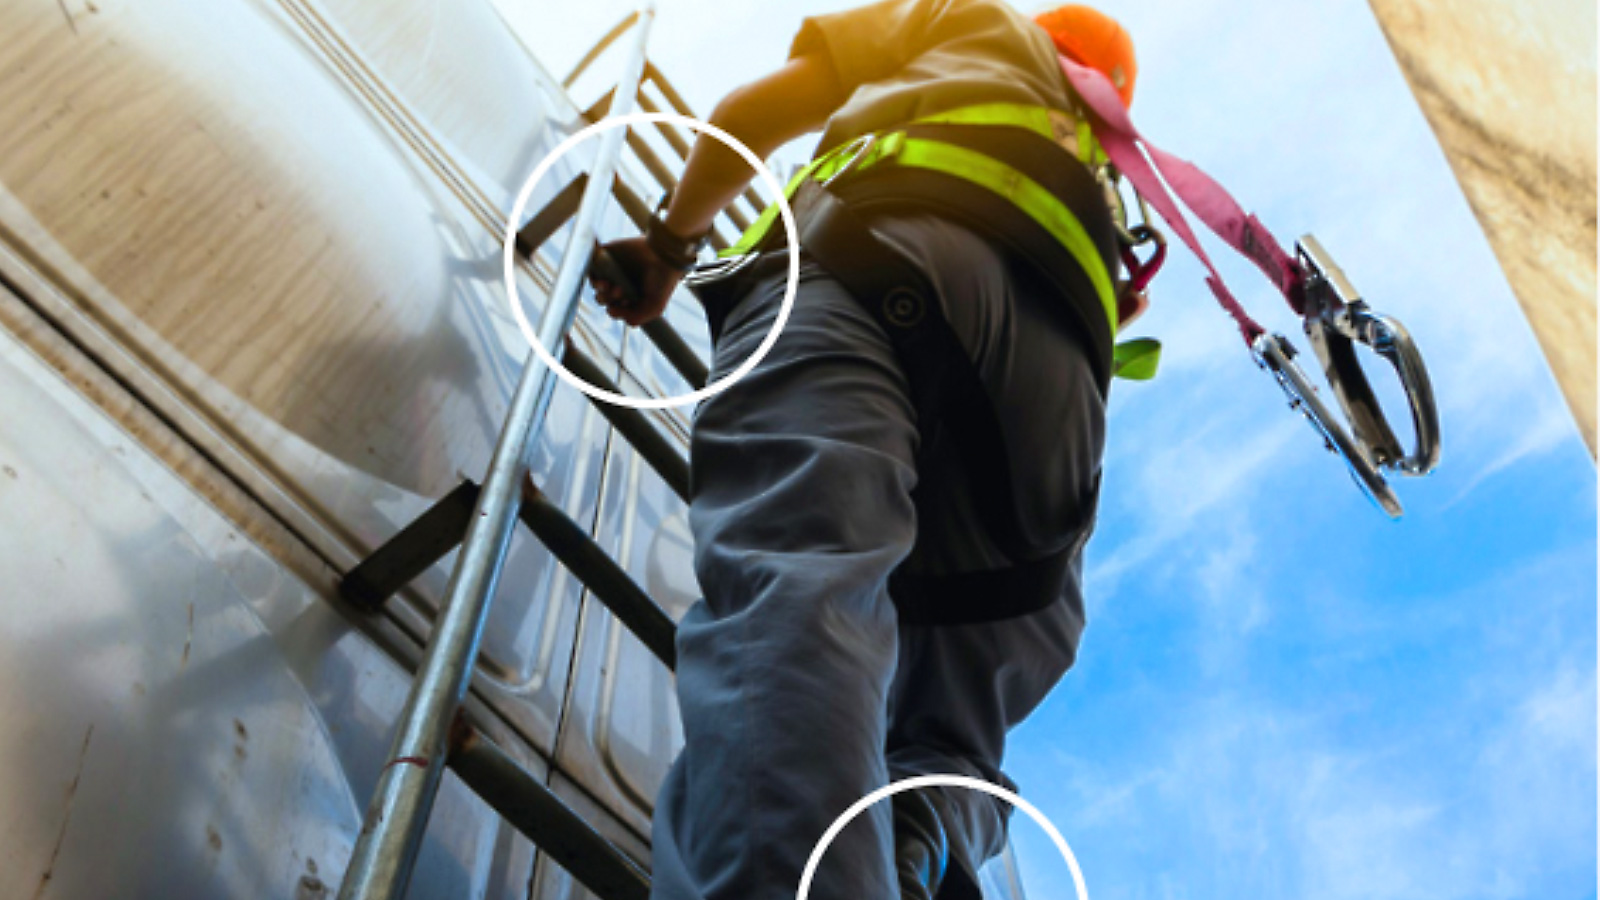 Climbing Safety: OSHA’s National Ladder Safety Month